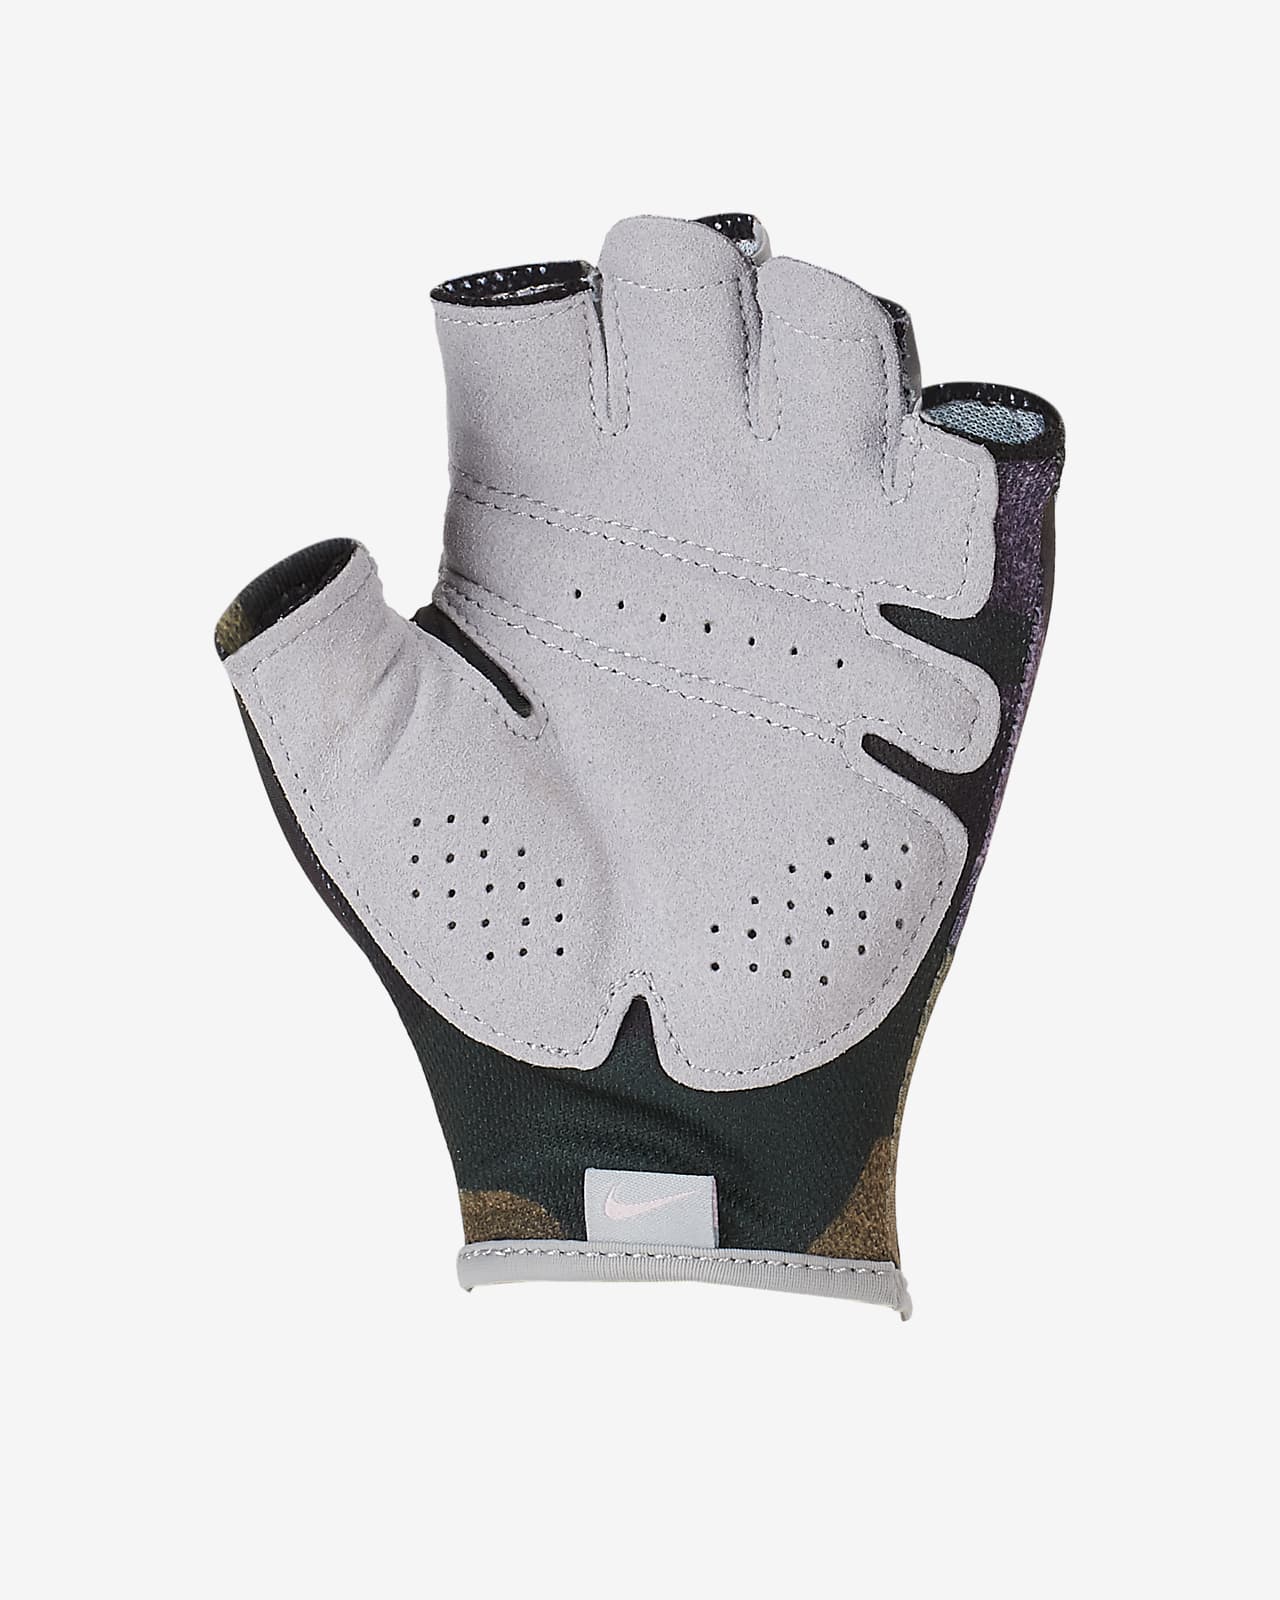 nike ultimate training gloves